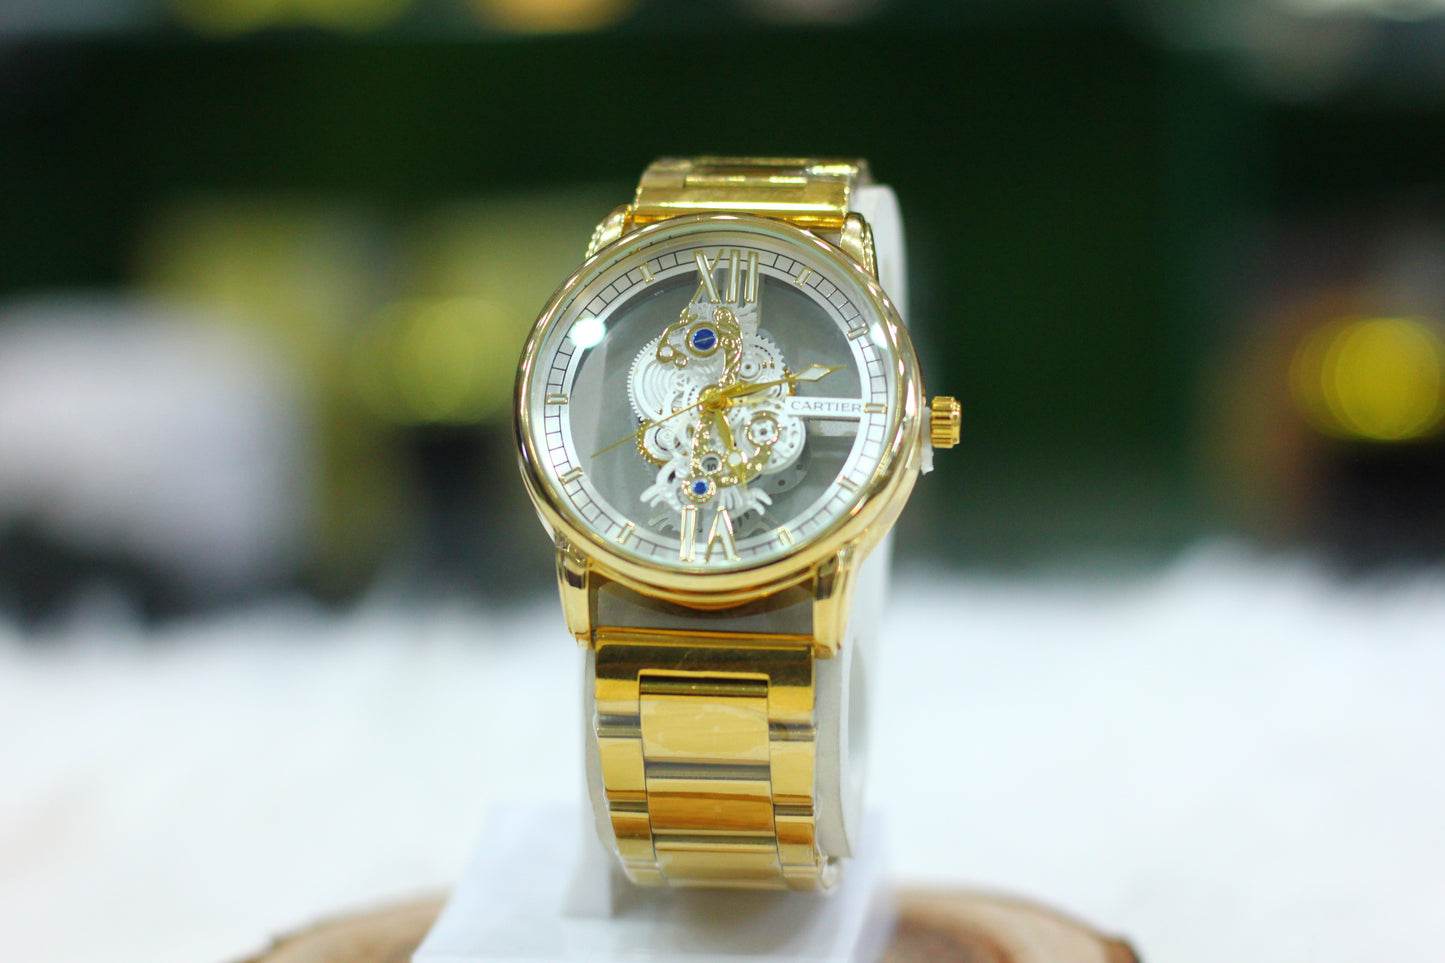 Cartier Golden Watch - Adventure Meets Style